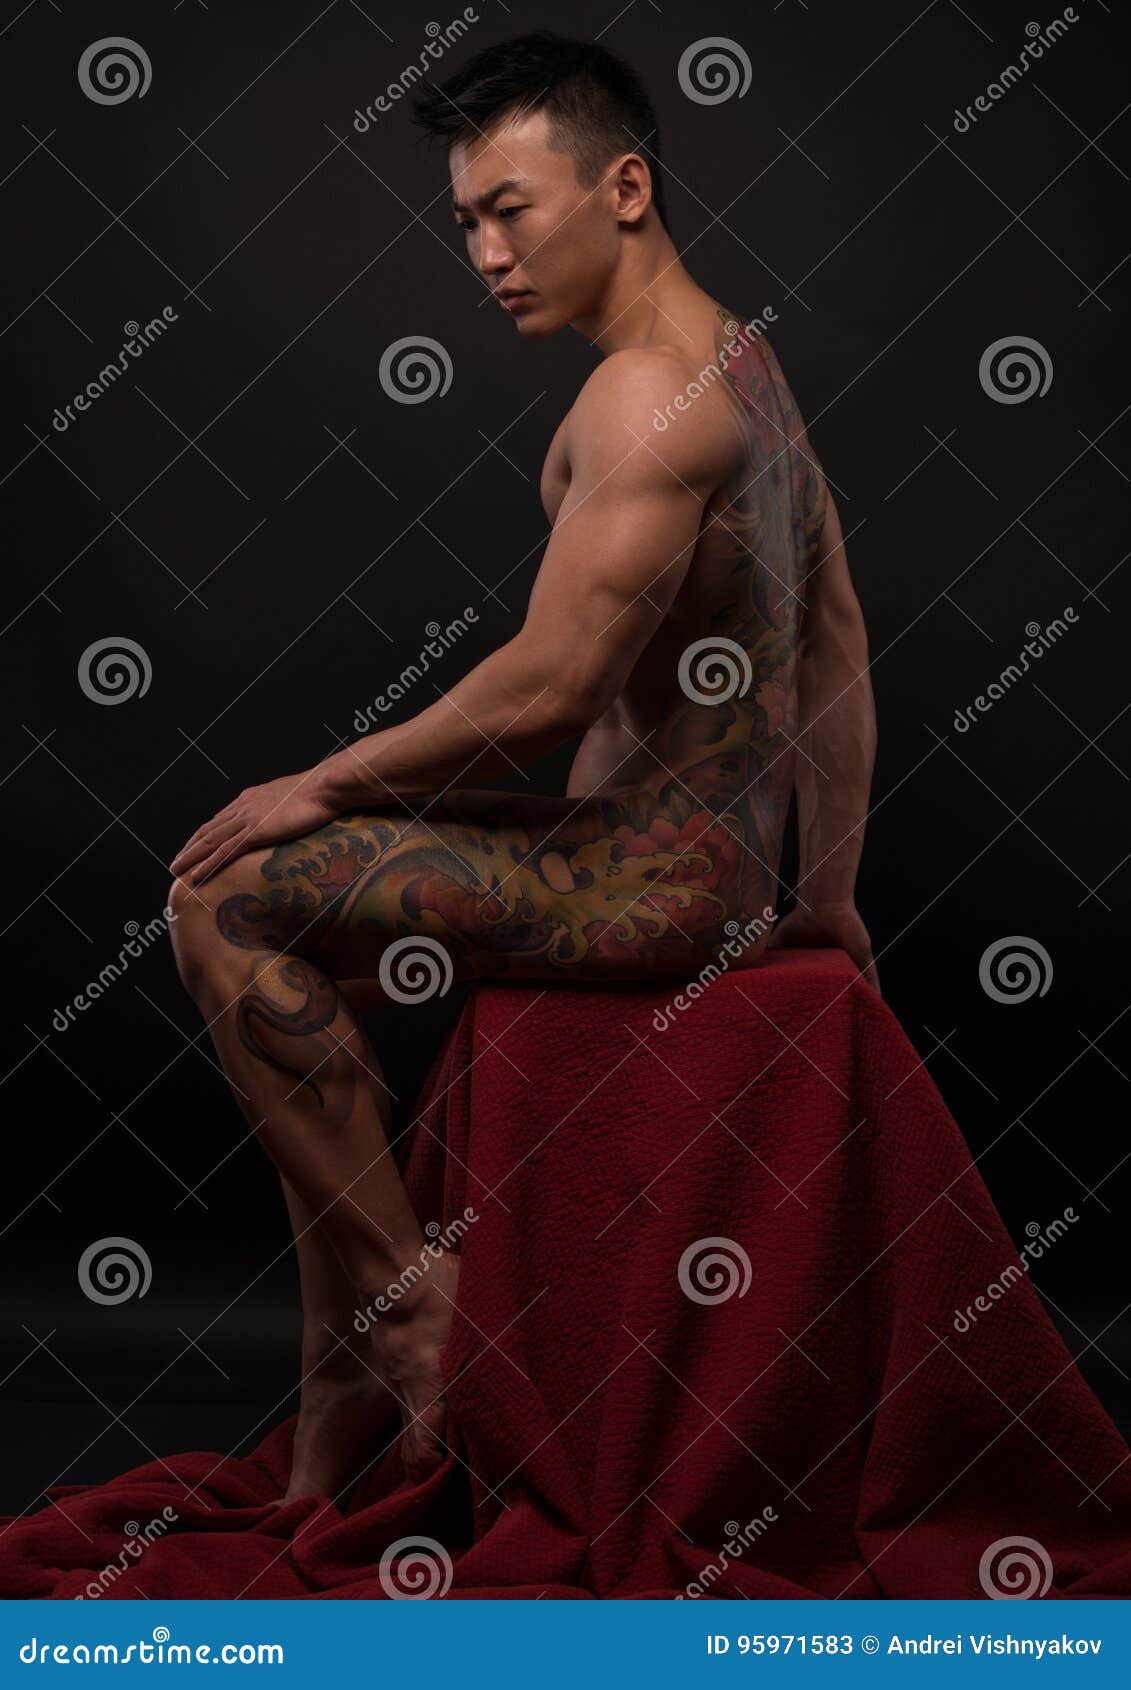 david fesperman share nude asian male model photos